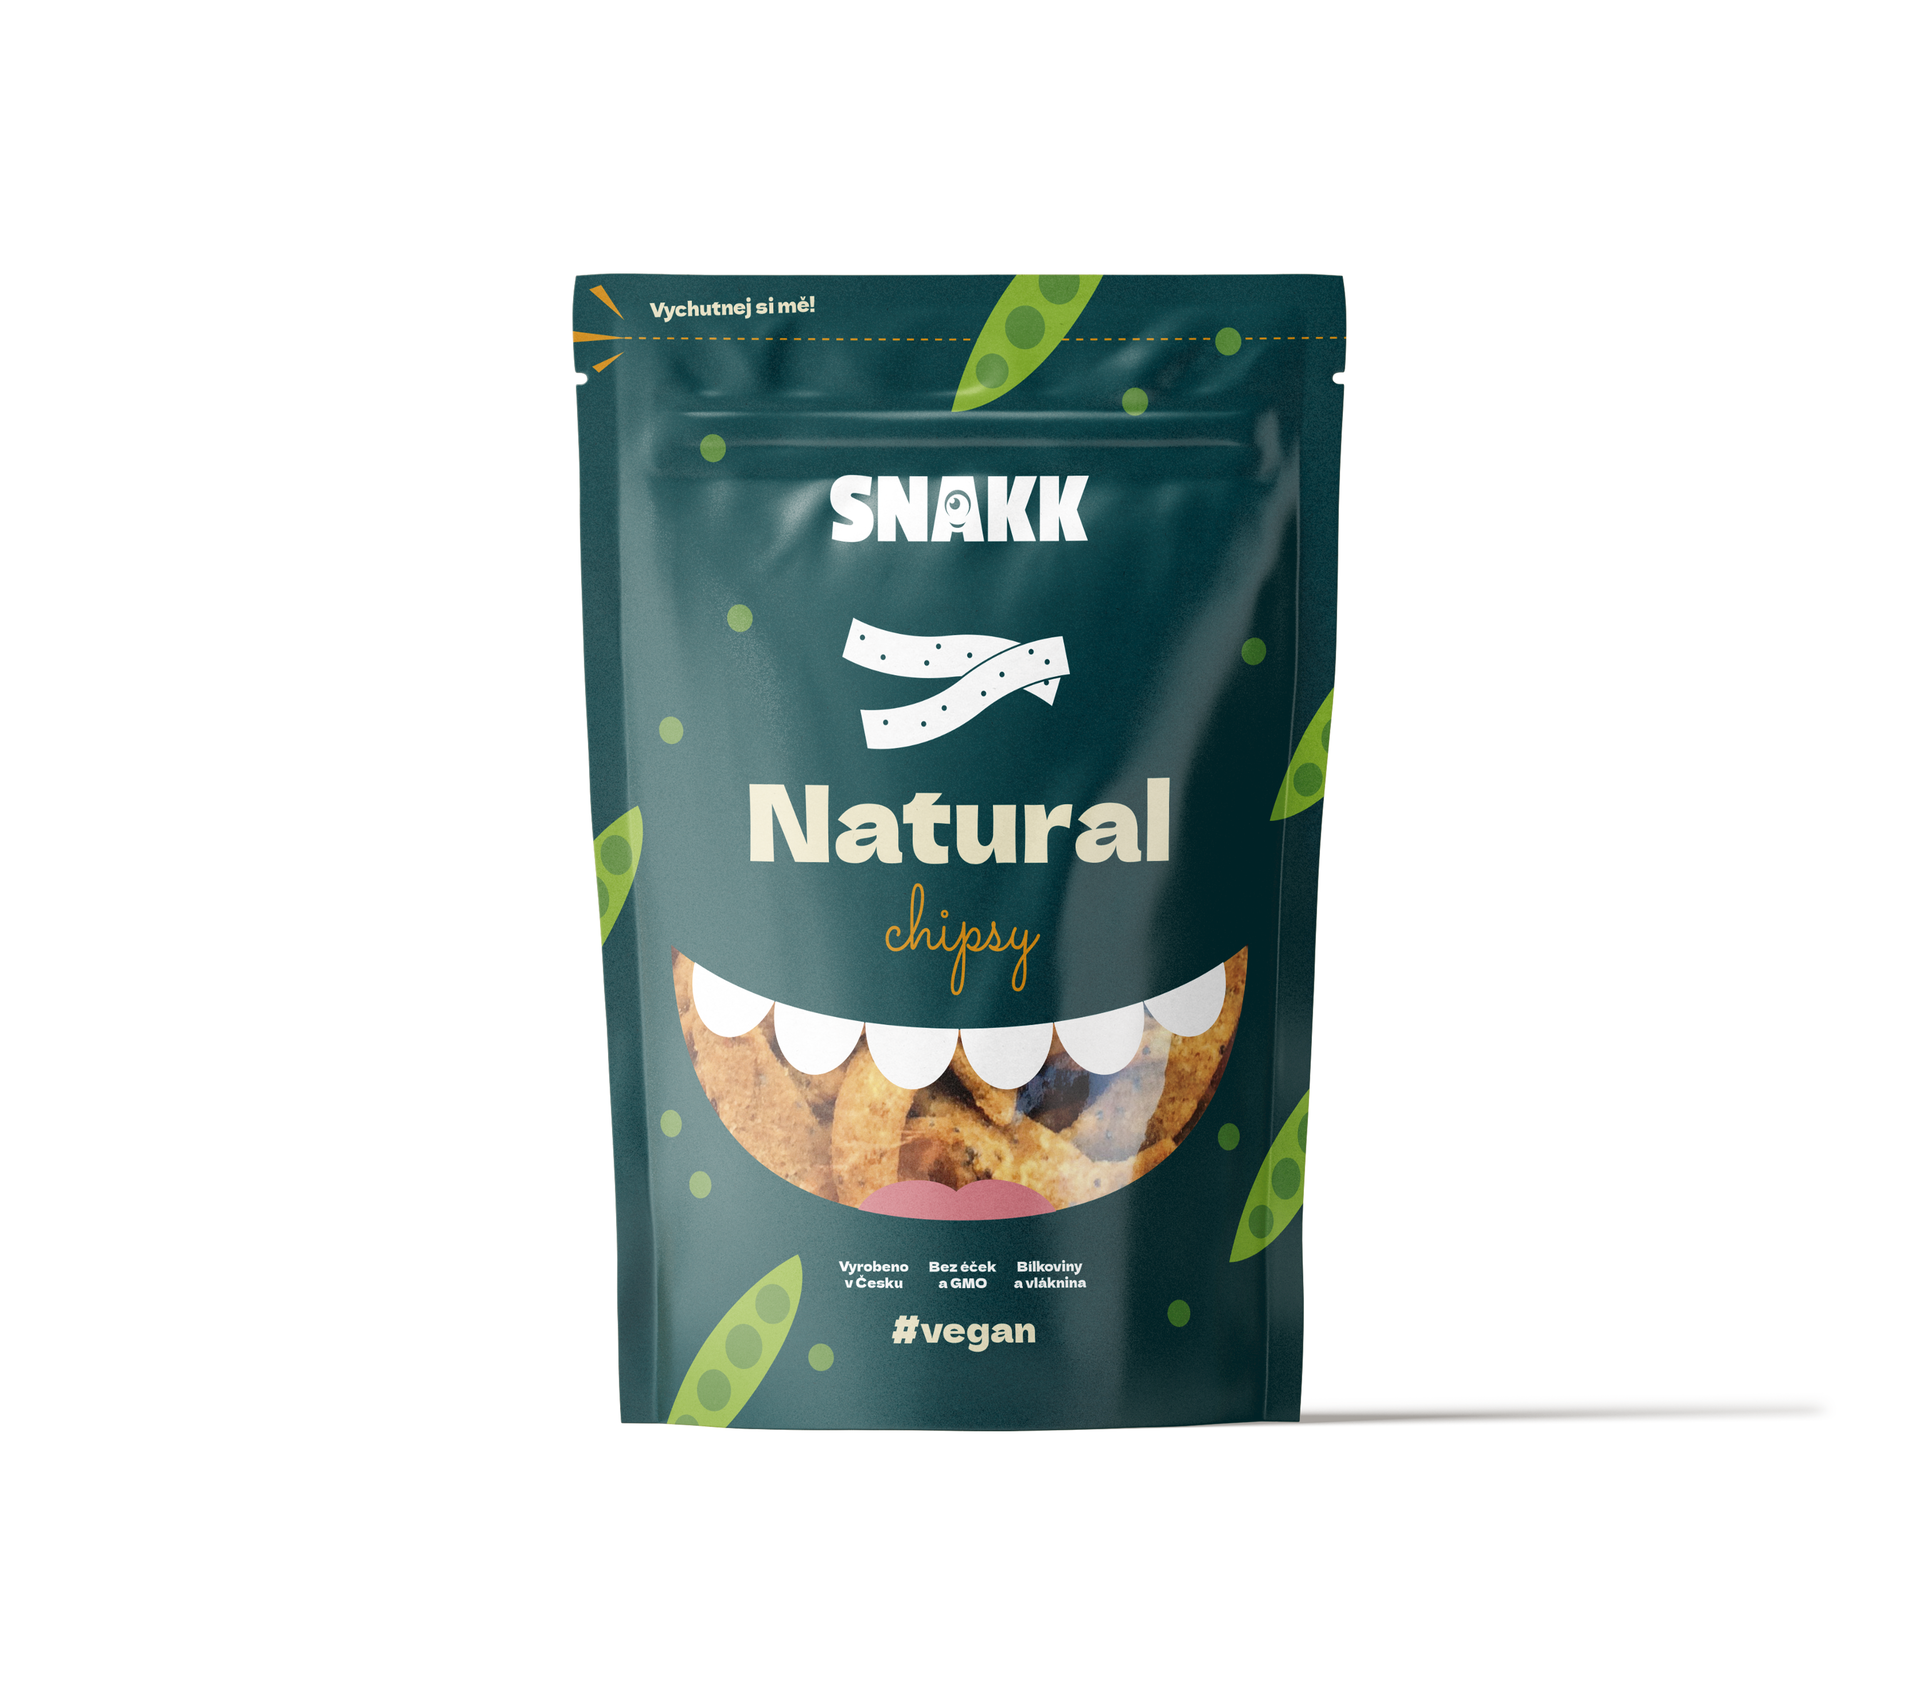 Snakk Natural chipsy 70 g - expirace